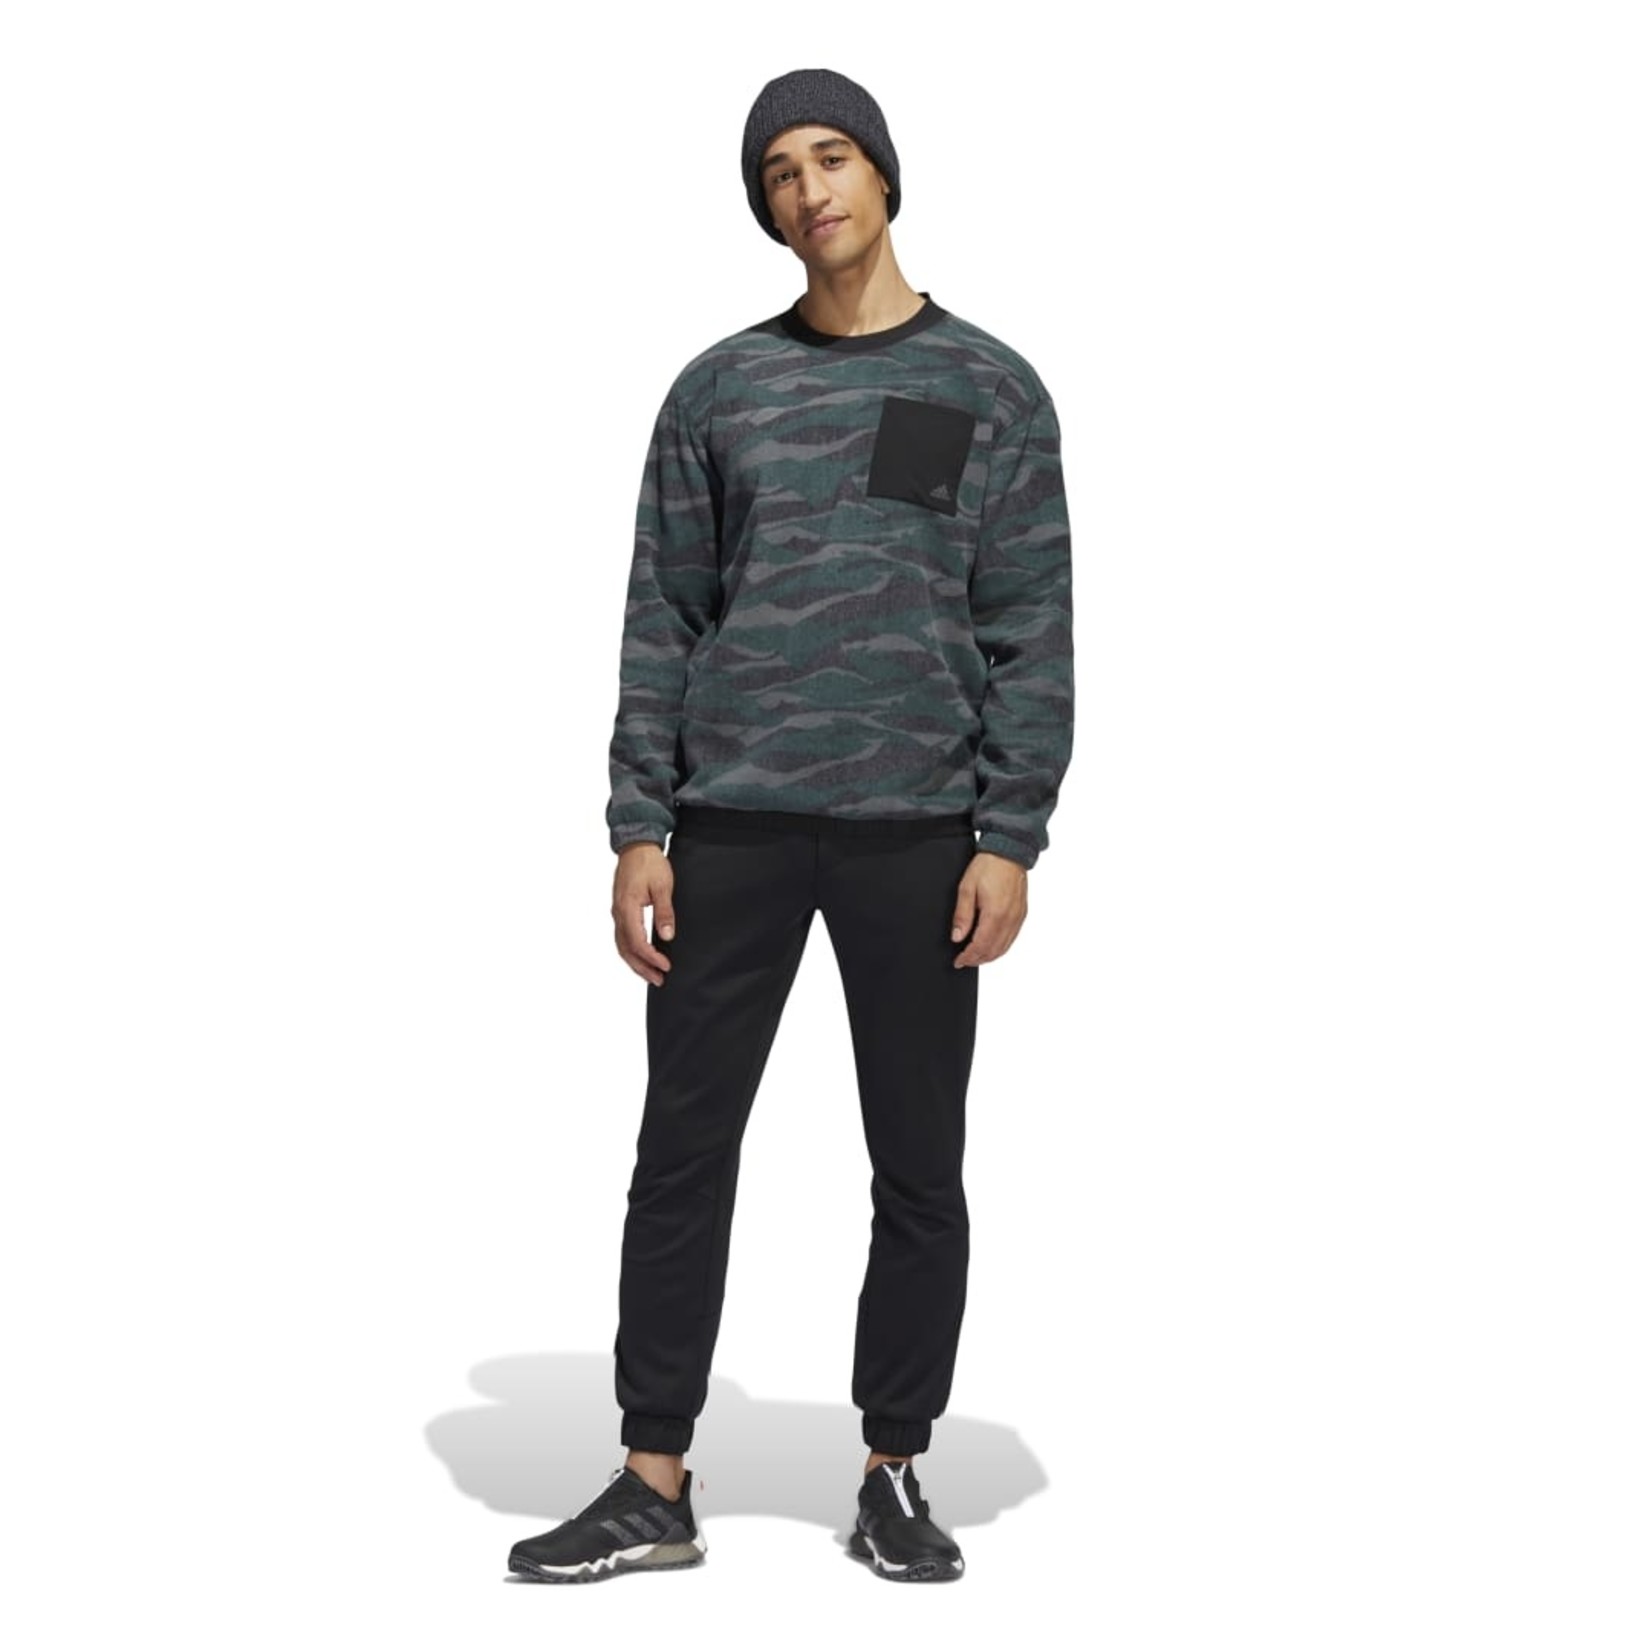 Adidas Adidas M Texture-Print Sweatshirt - Army CBlack/Dksim